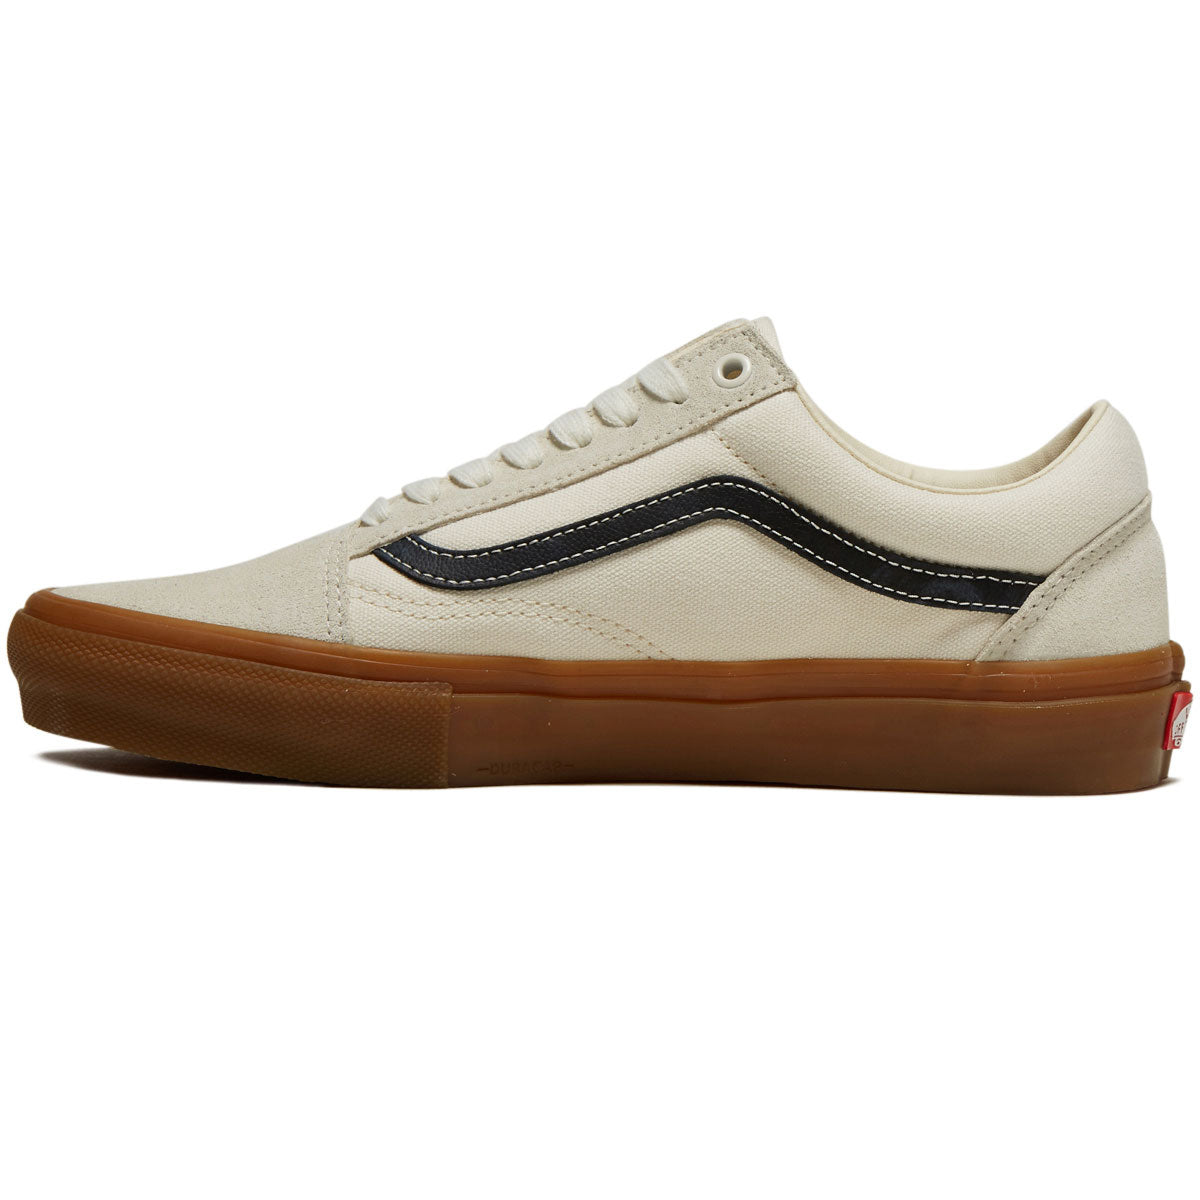 Vans Skate Old Skool Shoes - Marshmallow/Gum image 2